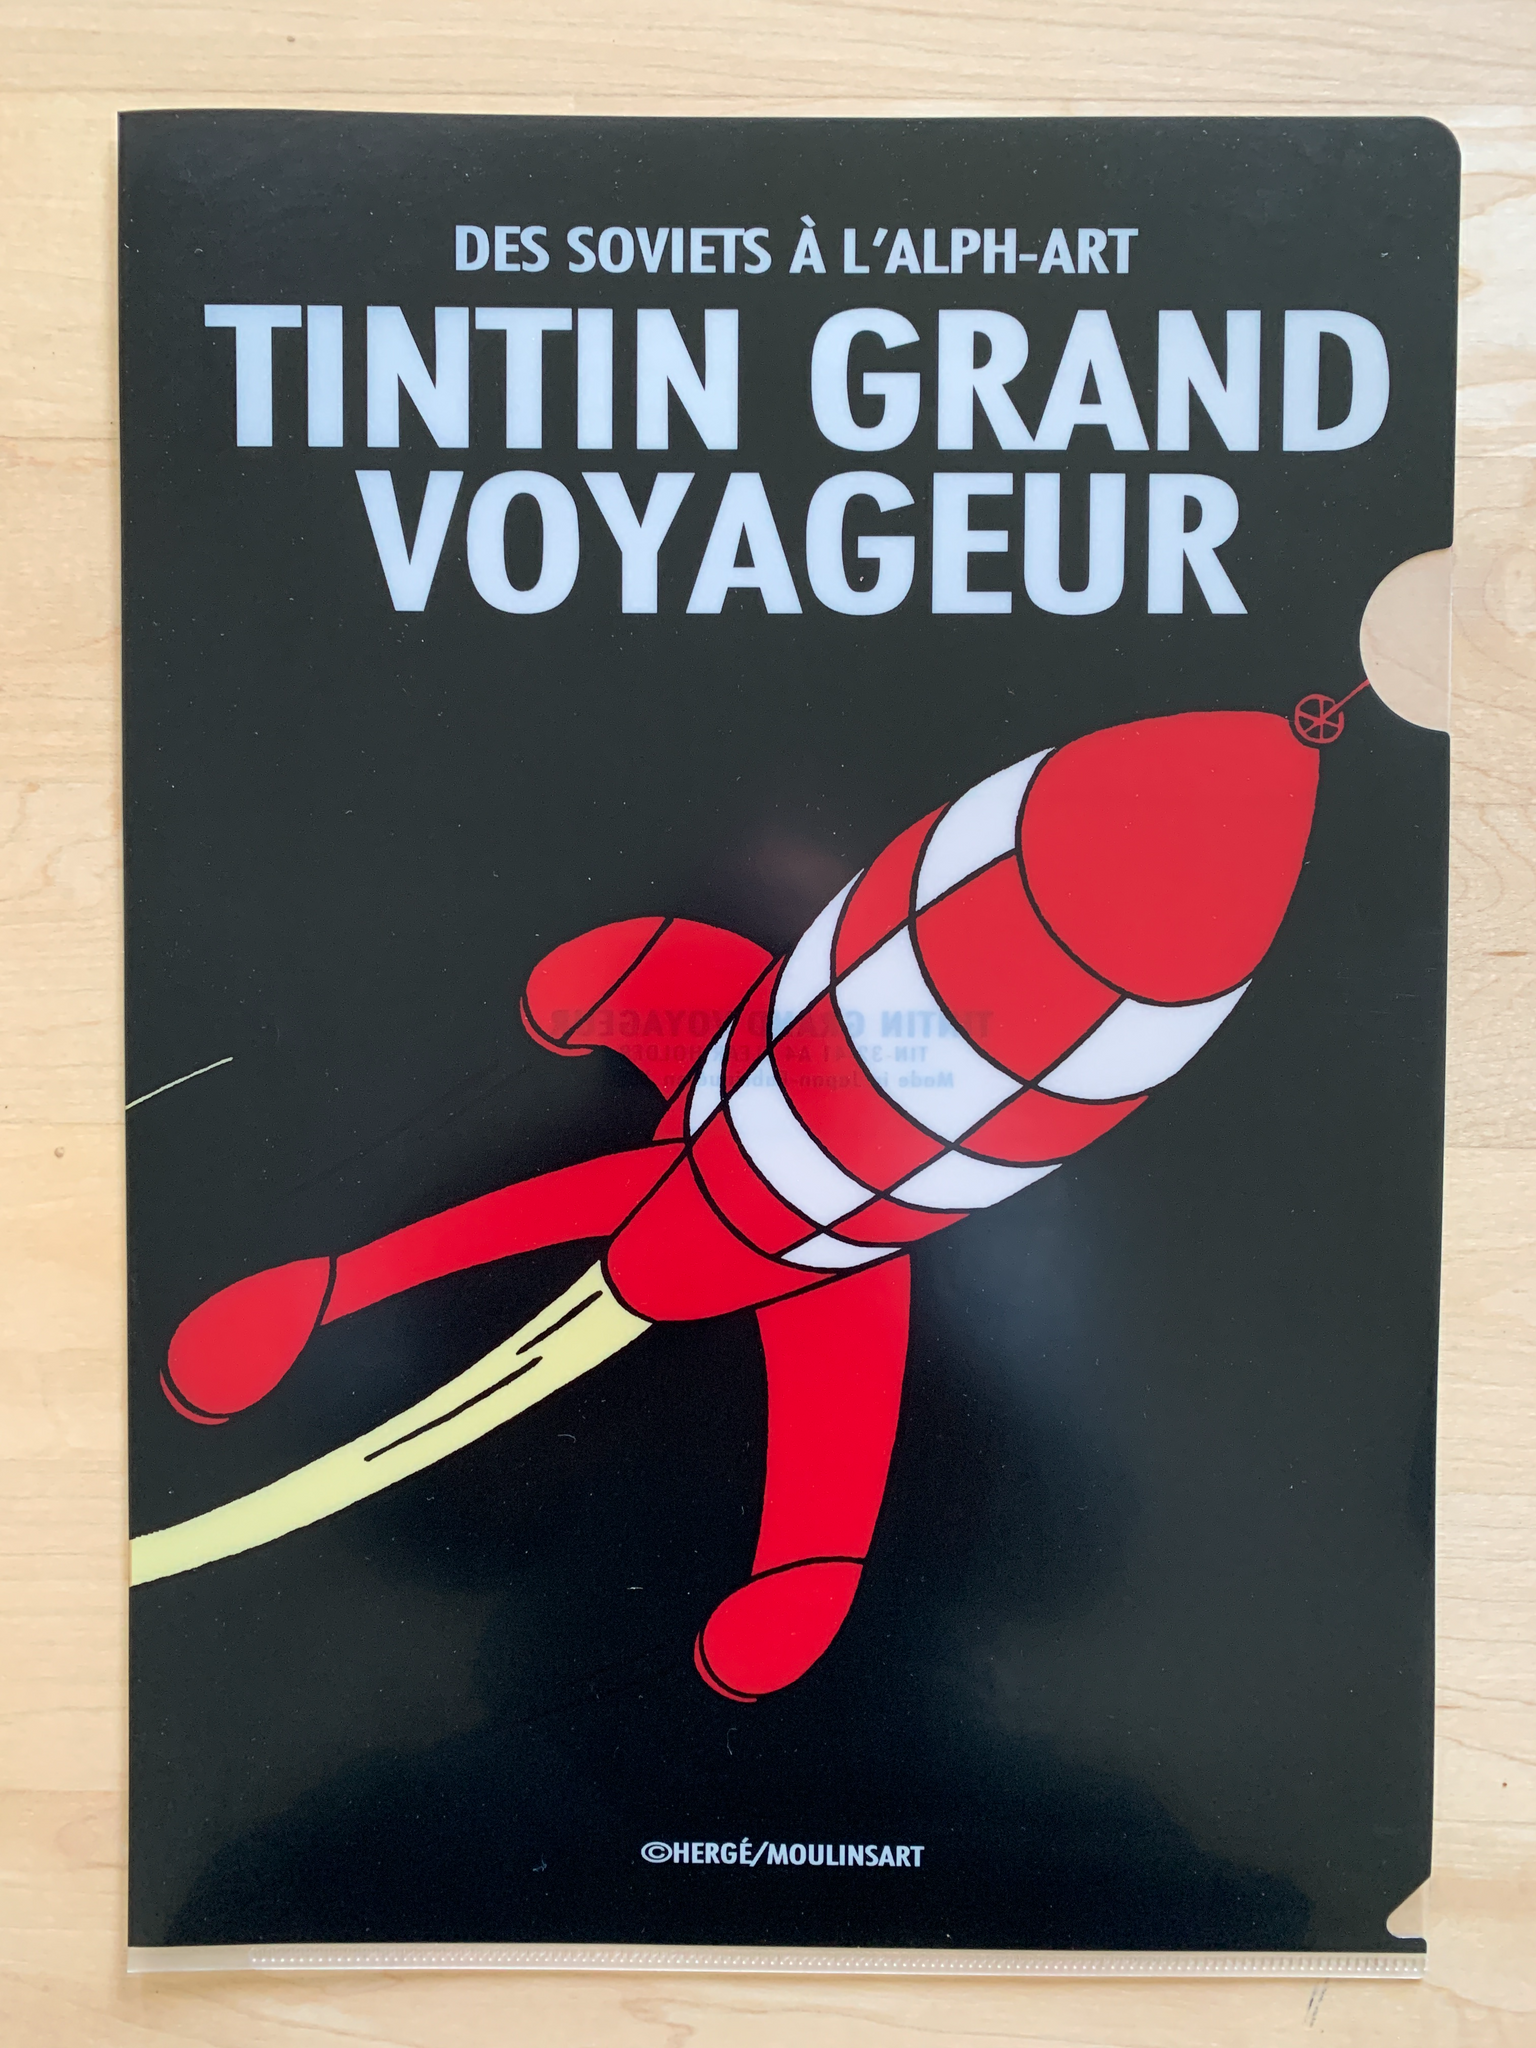 Fusée style Tintin 50 cm - Figurines